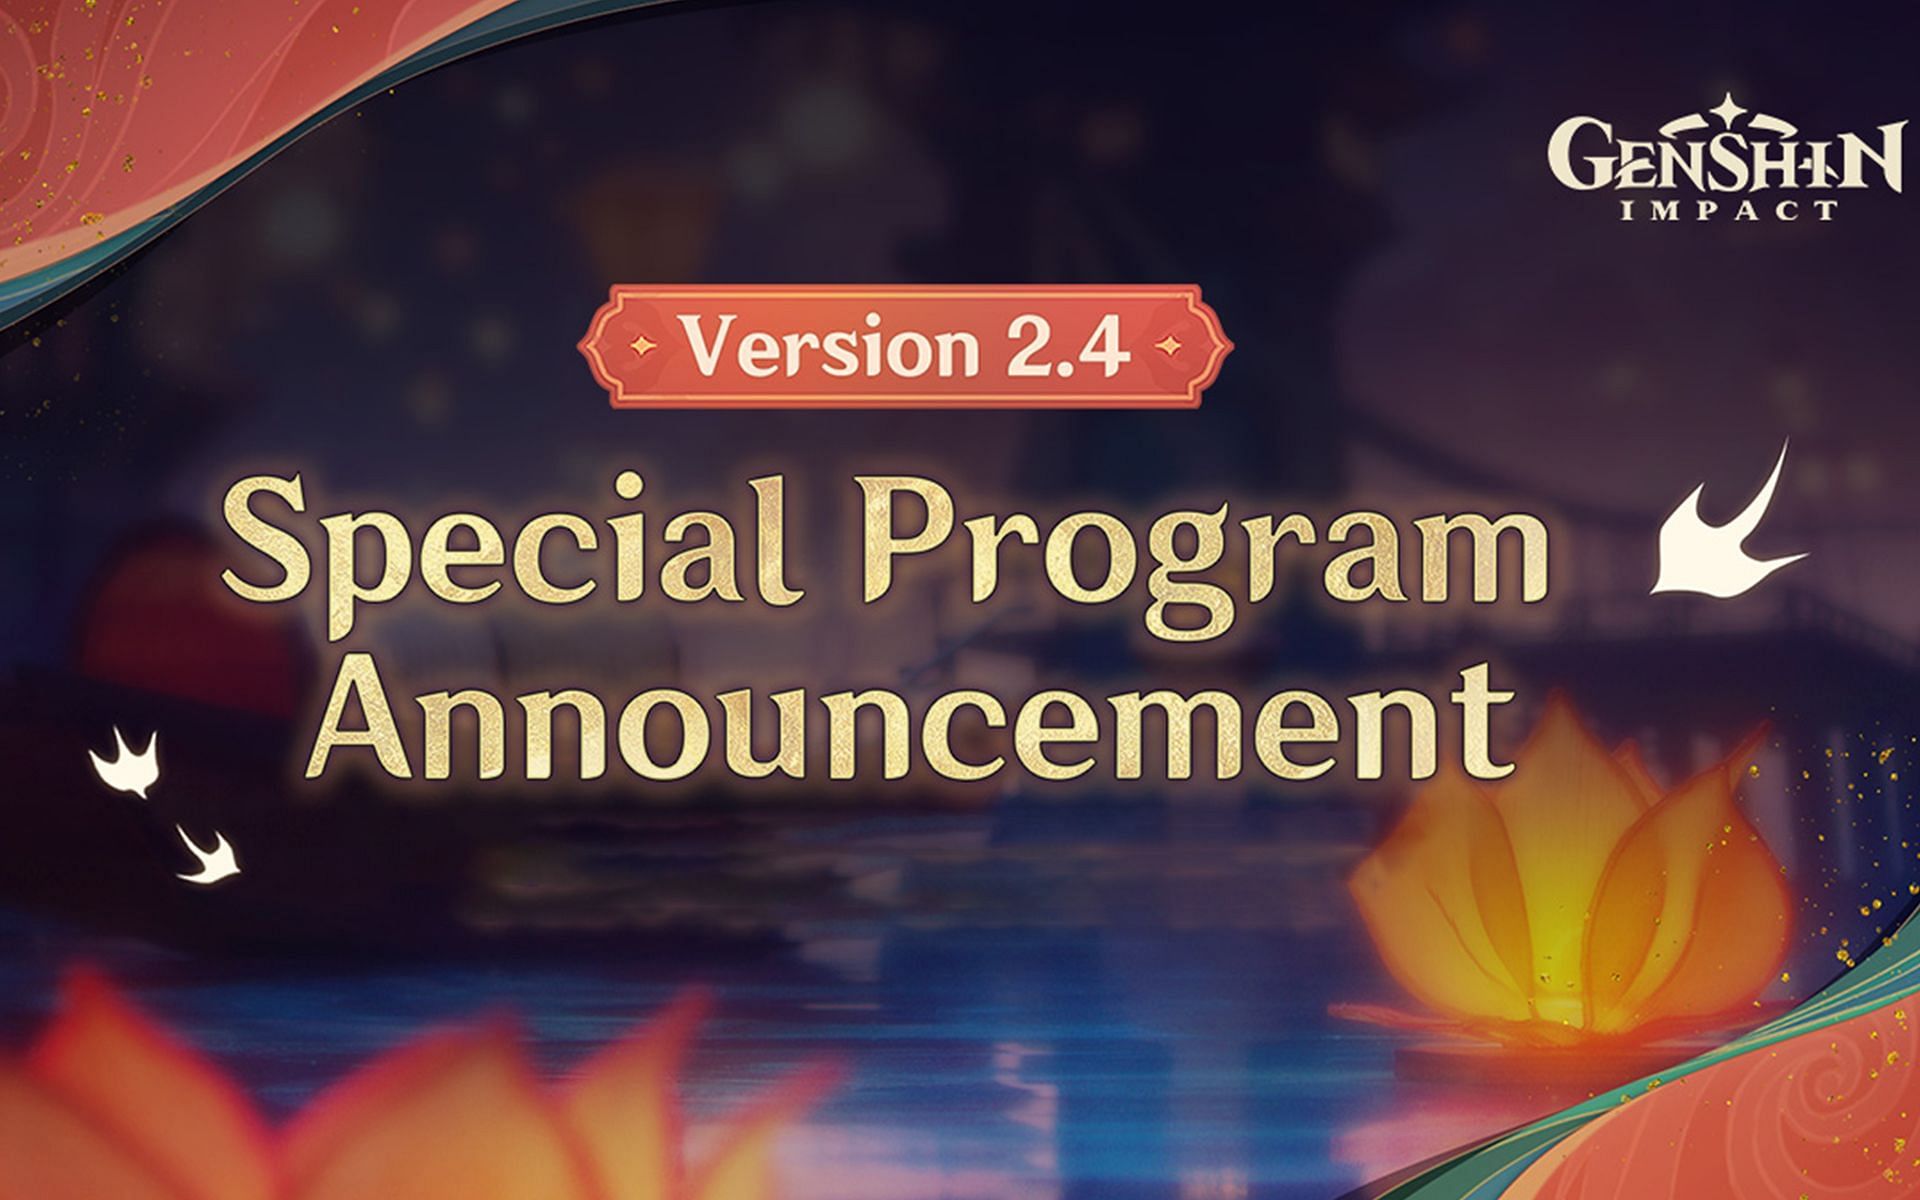 Genshin Impact version 2.4 livestream date has been officially announced (Image via Genshin Impact)